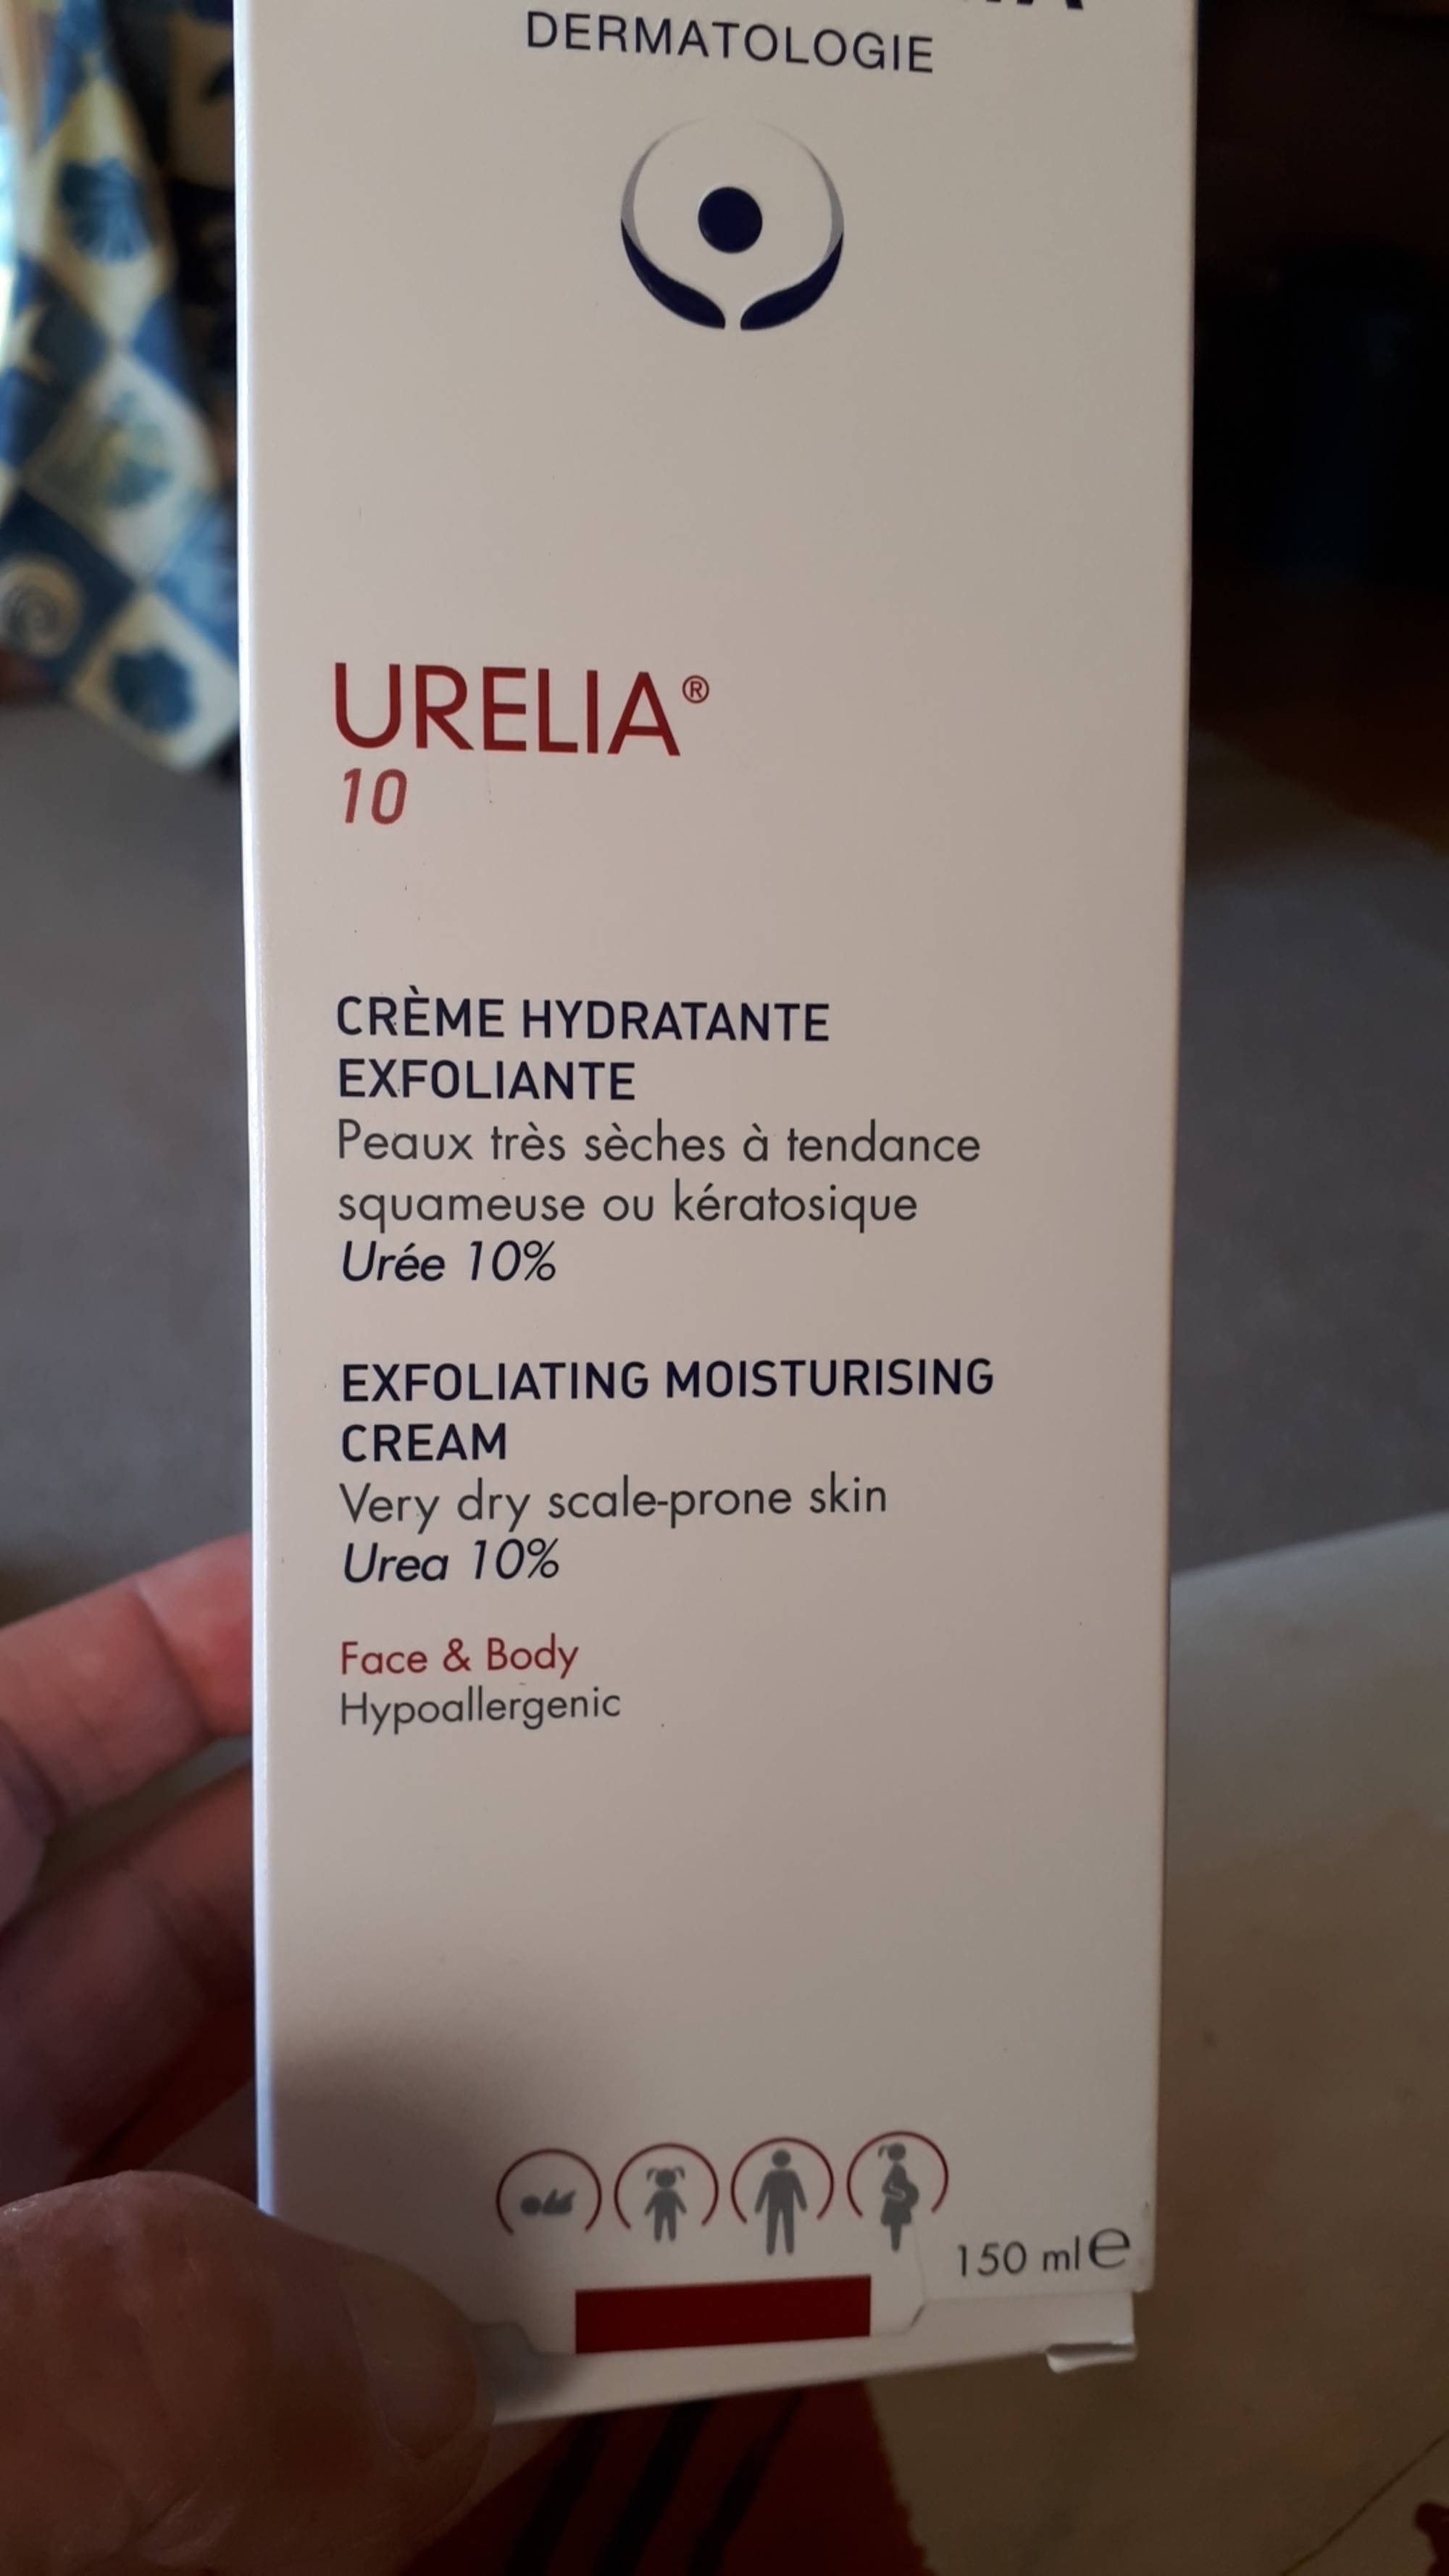 ISIS PHARMA - Urelia 10 - Crème hydratante exfoliante